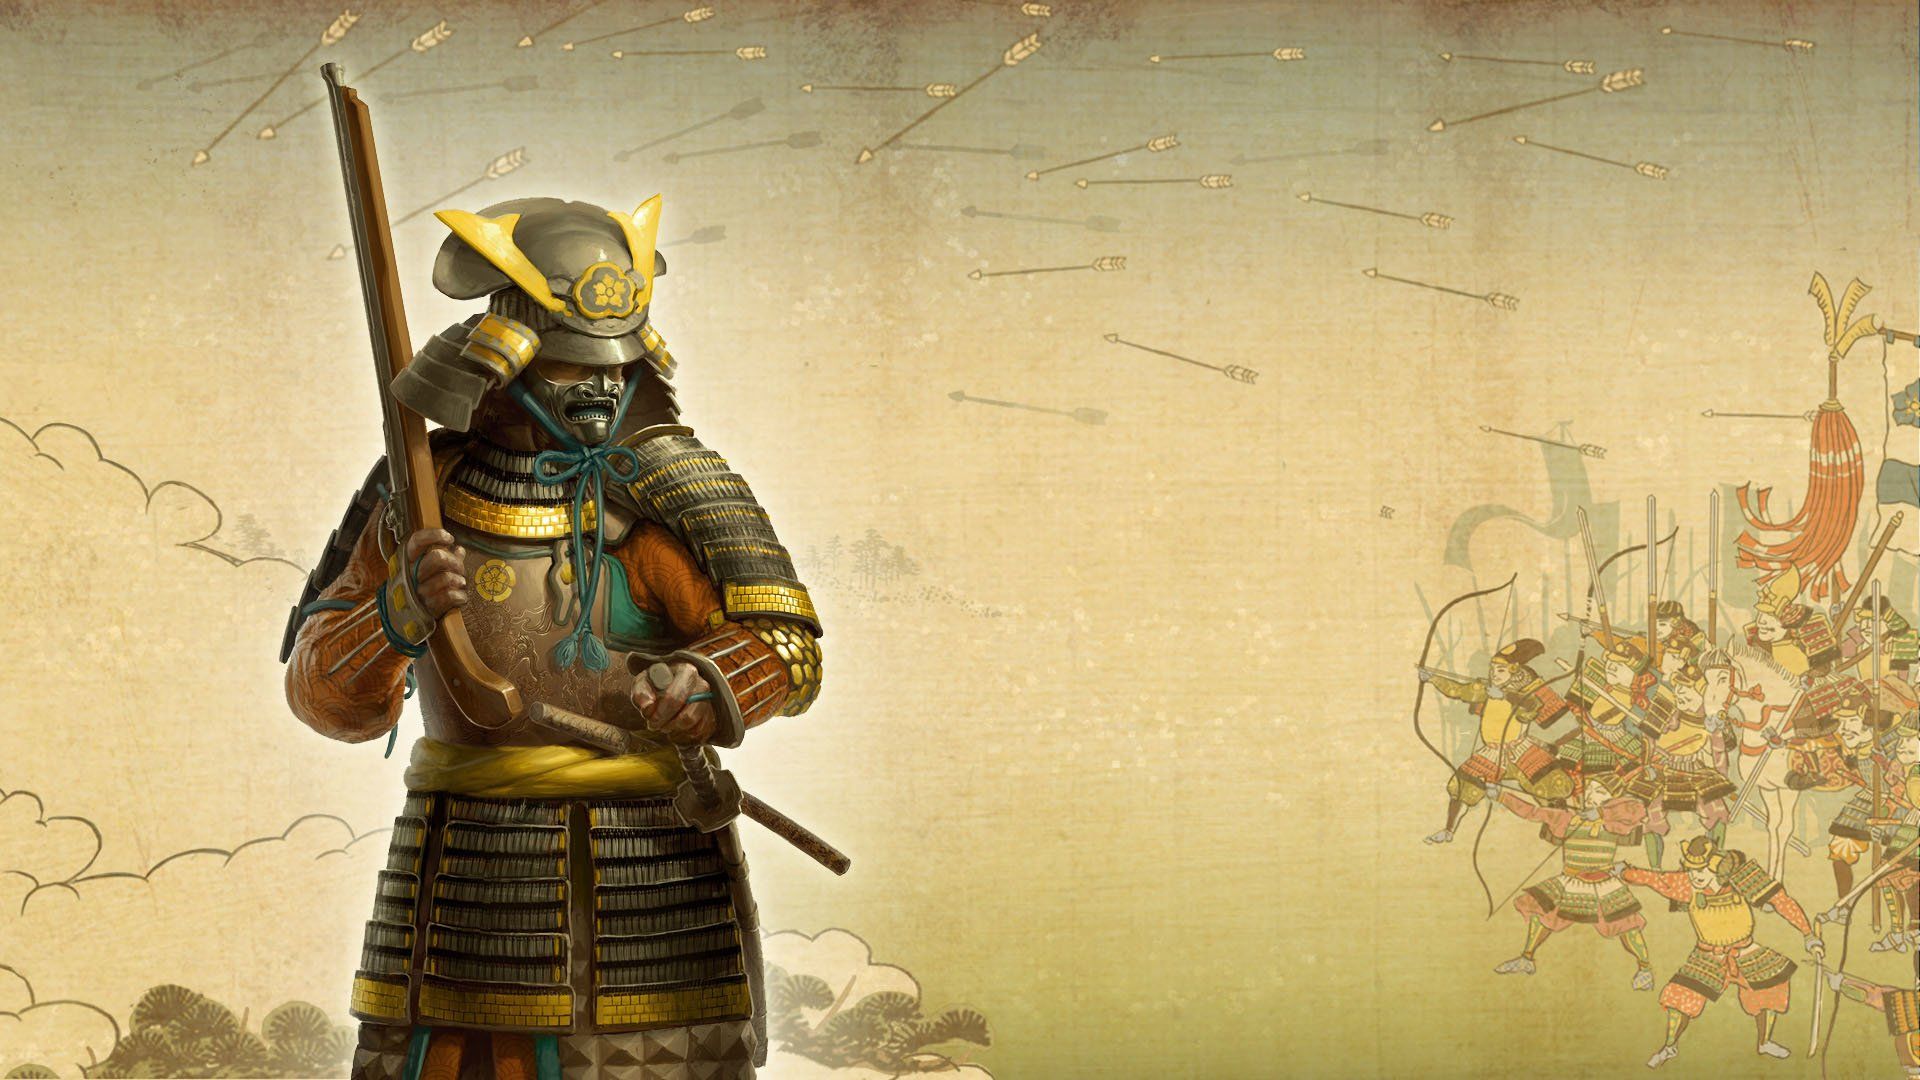 Total War Shogun 2 Wallpapers